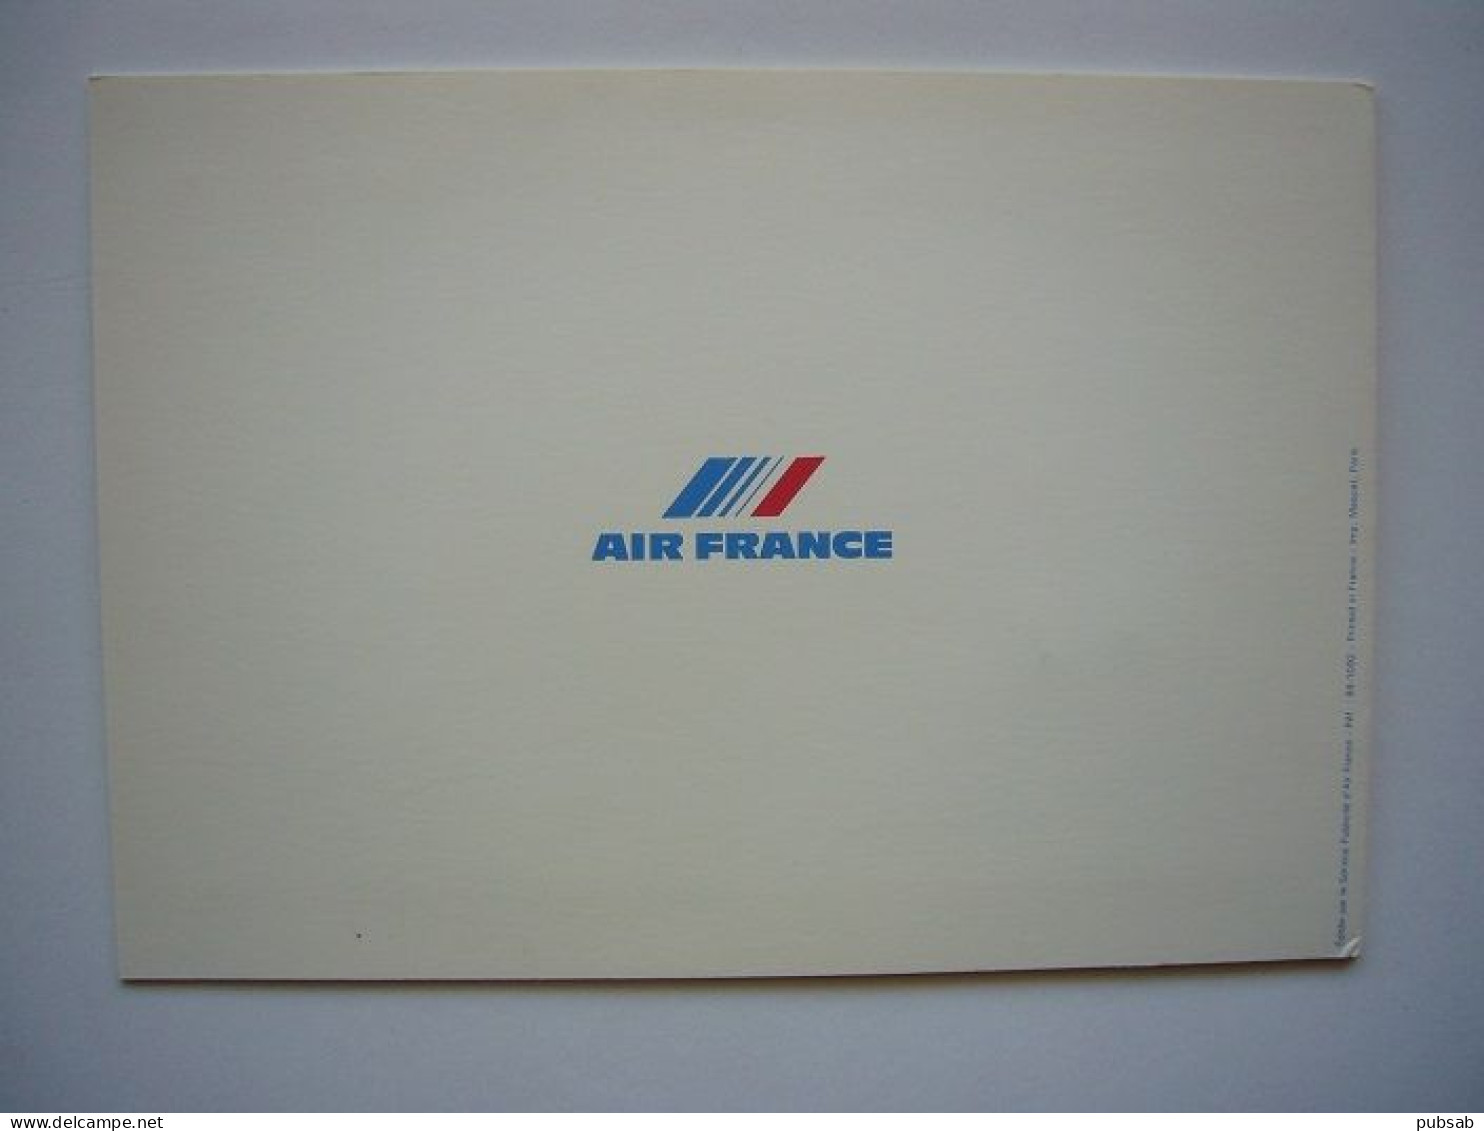 Avion / Airplane / AIR FRANCE / Carte De Voeux / Airline Issue / Size : 11X15,5cm - 1946-....: Era Moderna